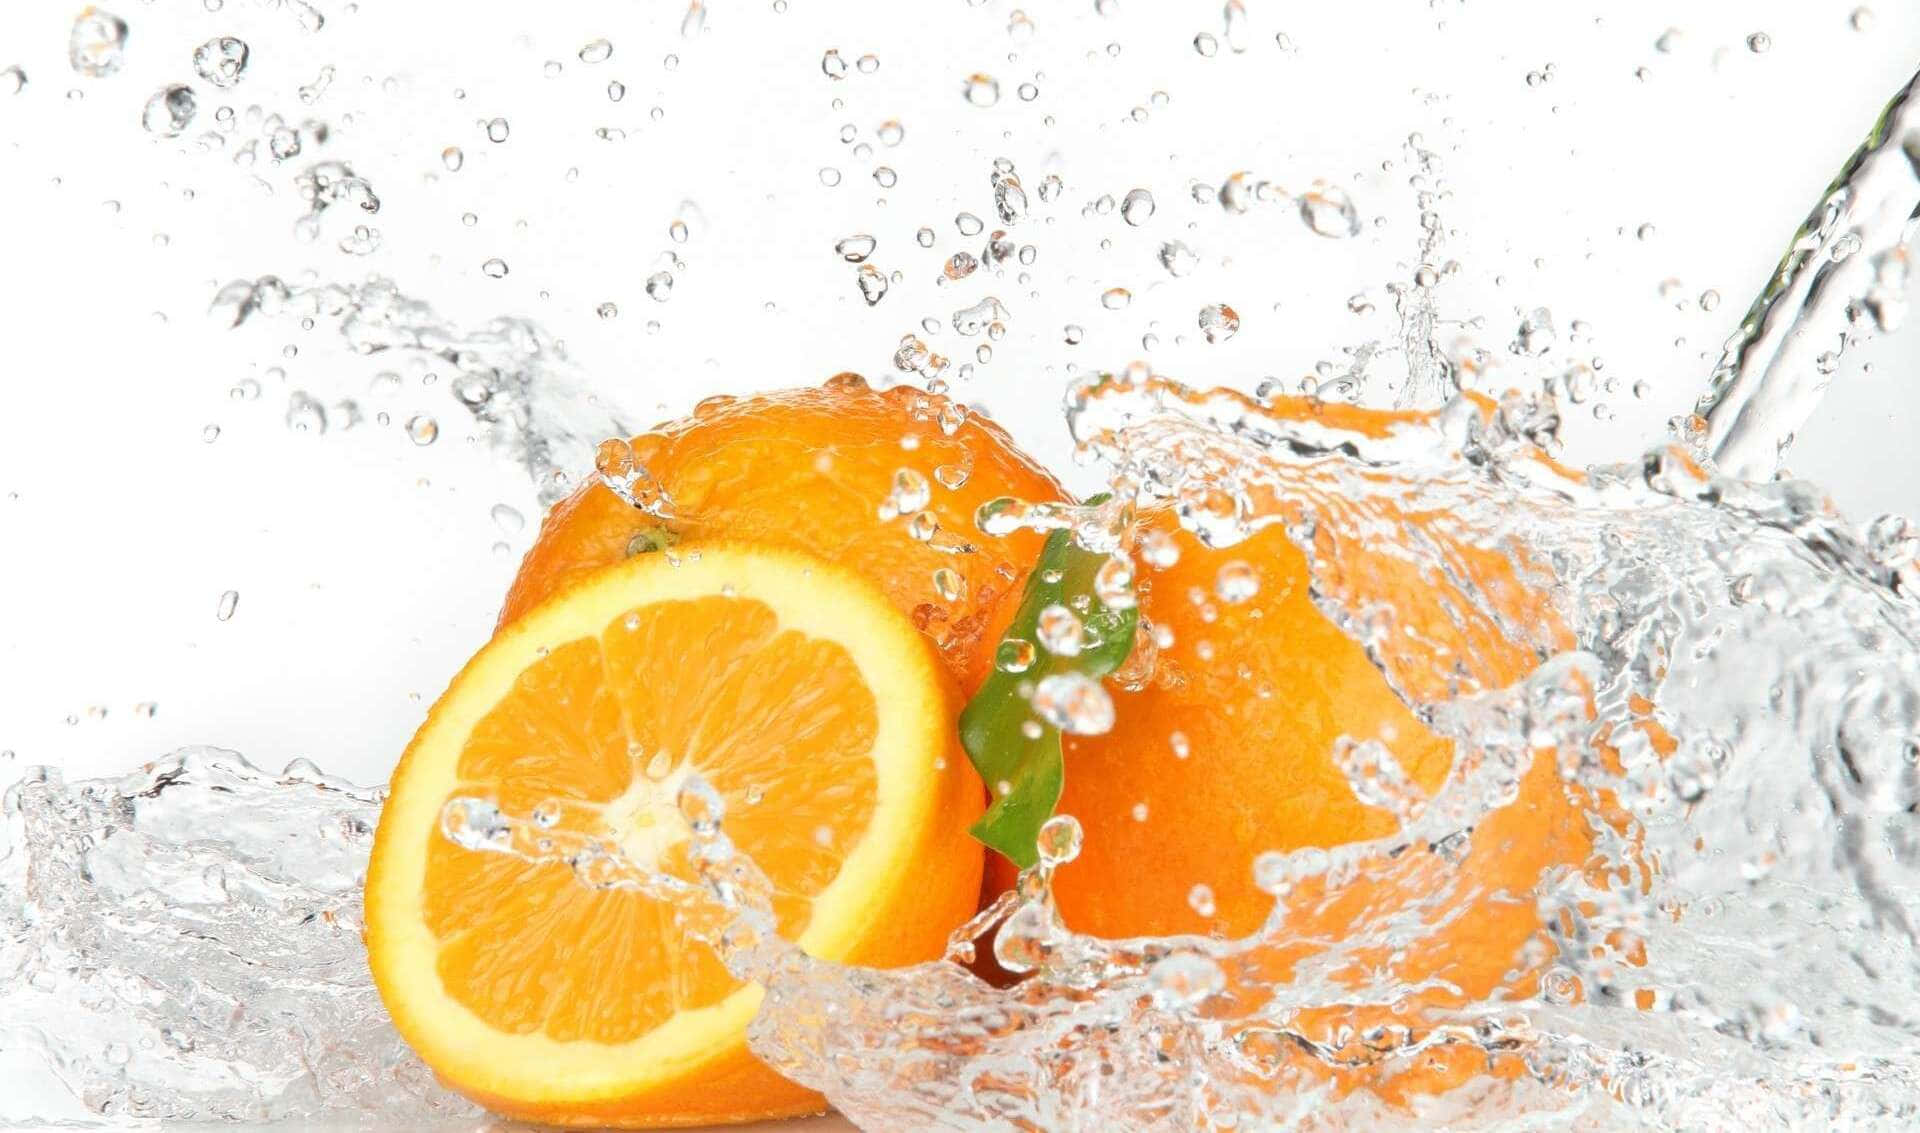 Two slice of orange fruit with some water splash or splatter look